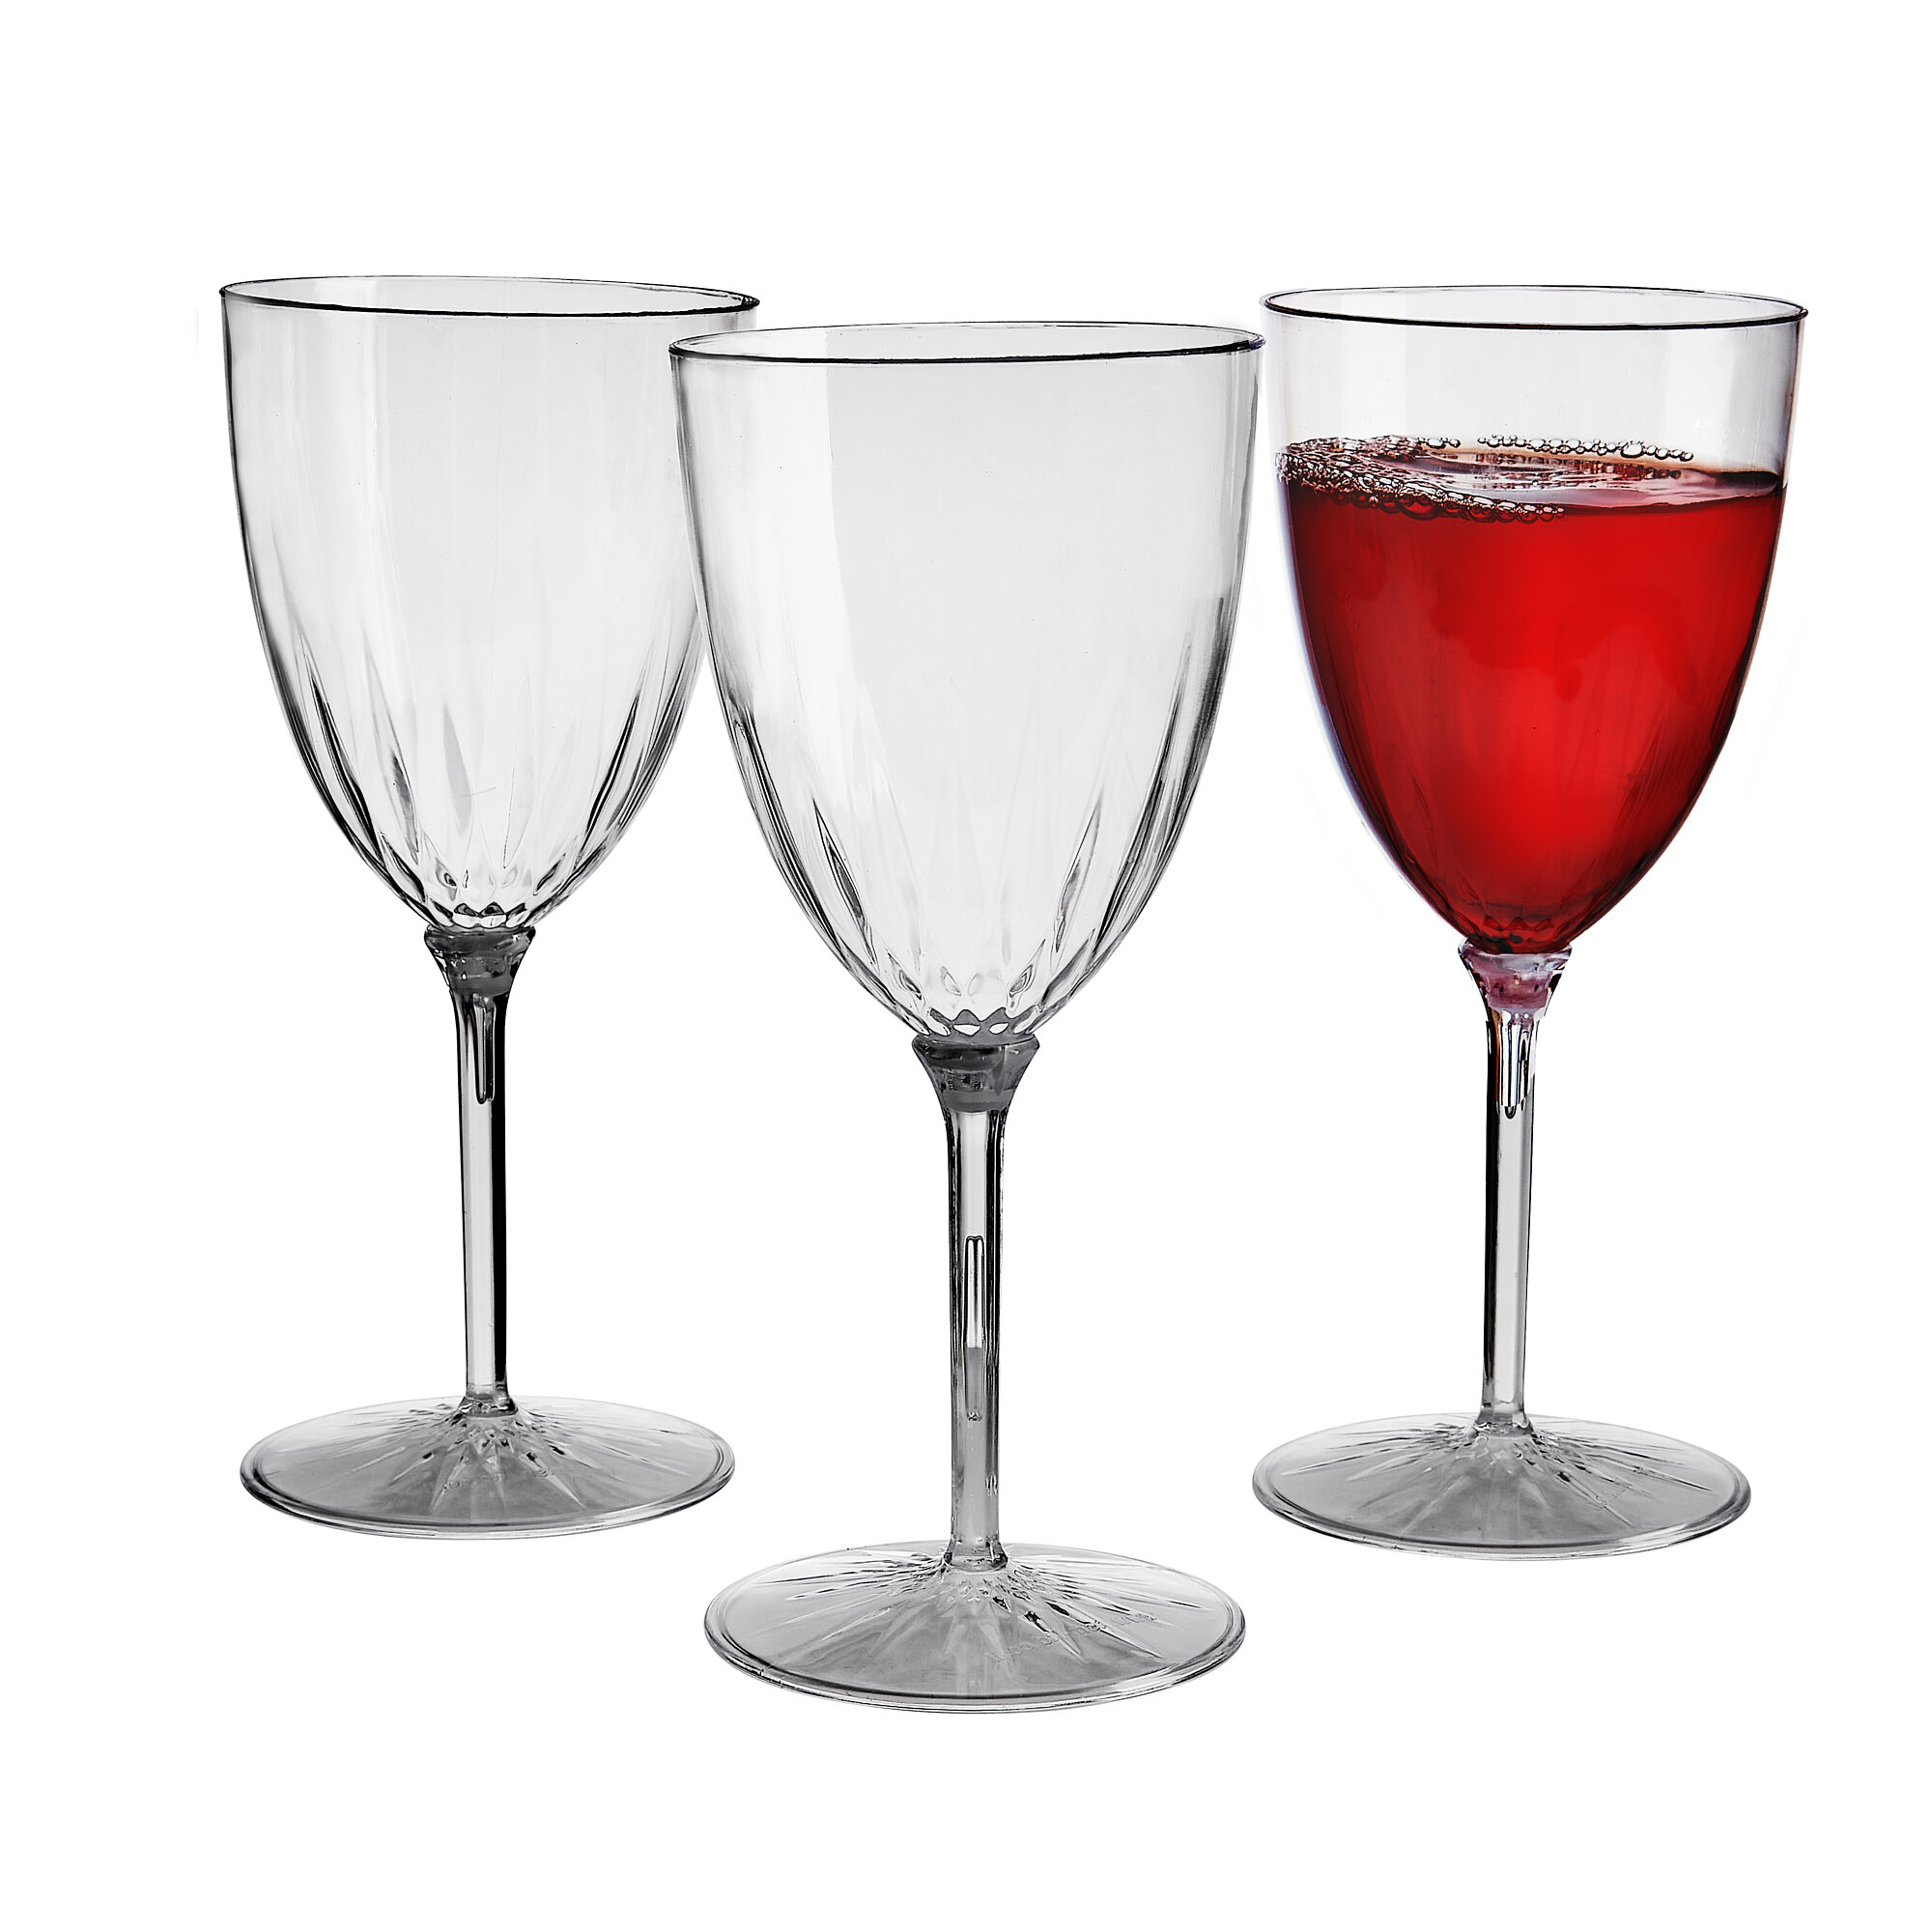 Vintage Wine Glasses Set of 6, Plastic Reusable 12